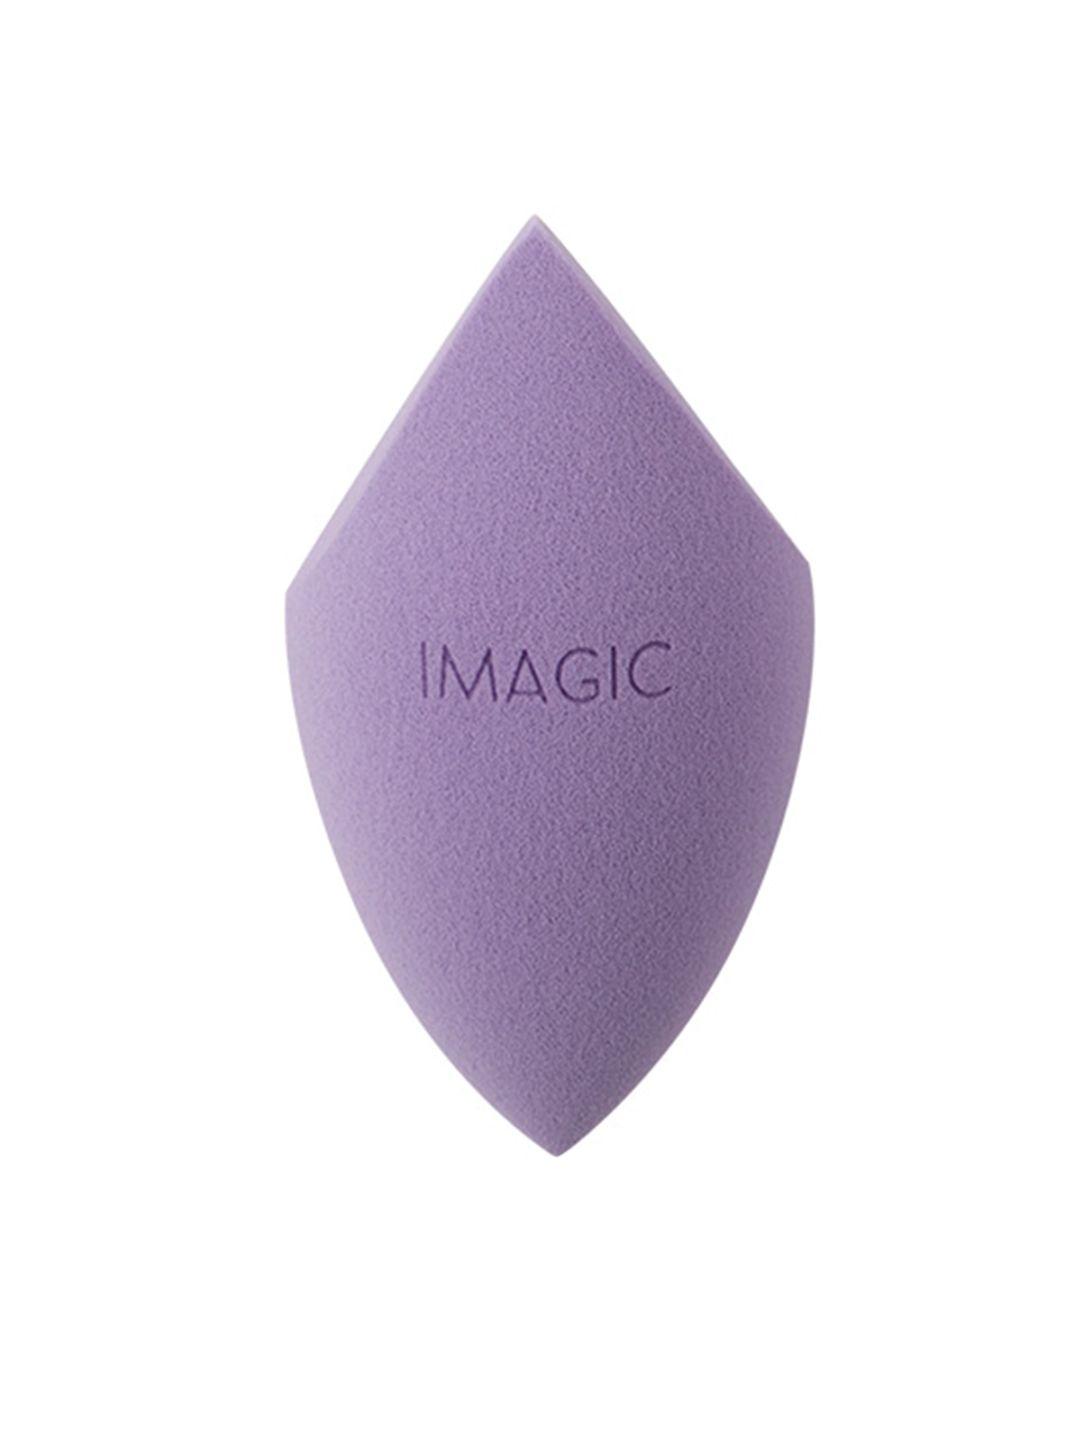 imagic professional cosmetics tl435-15 non latex makeup sponge - purple